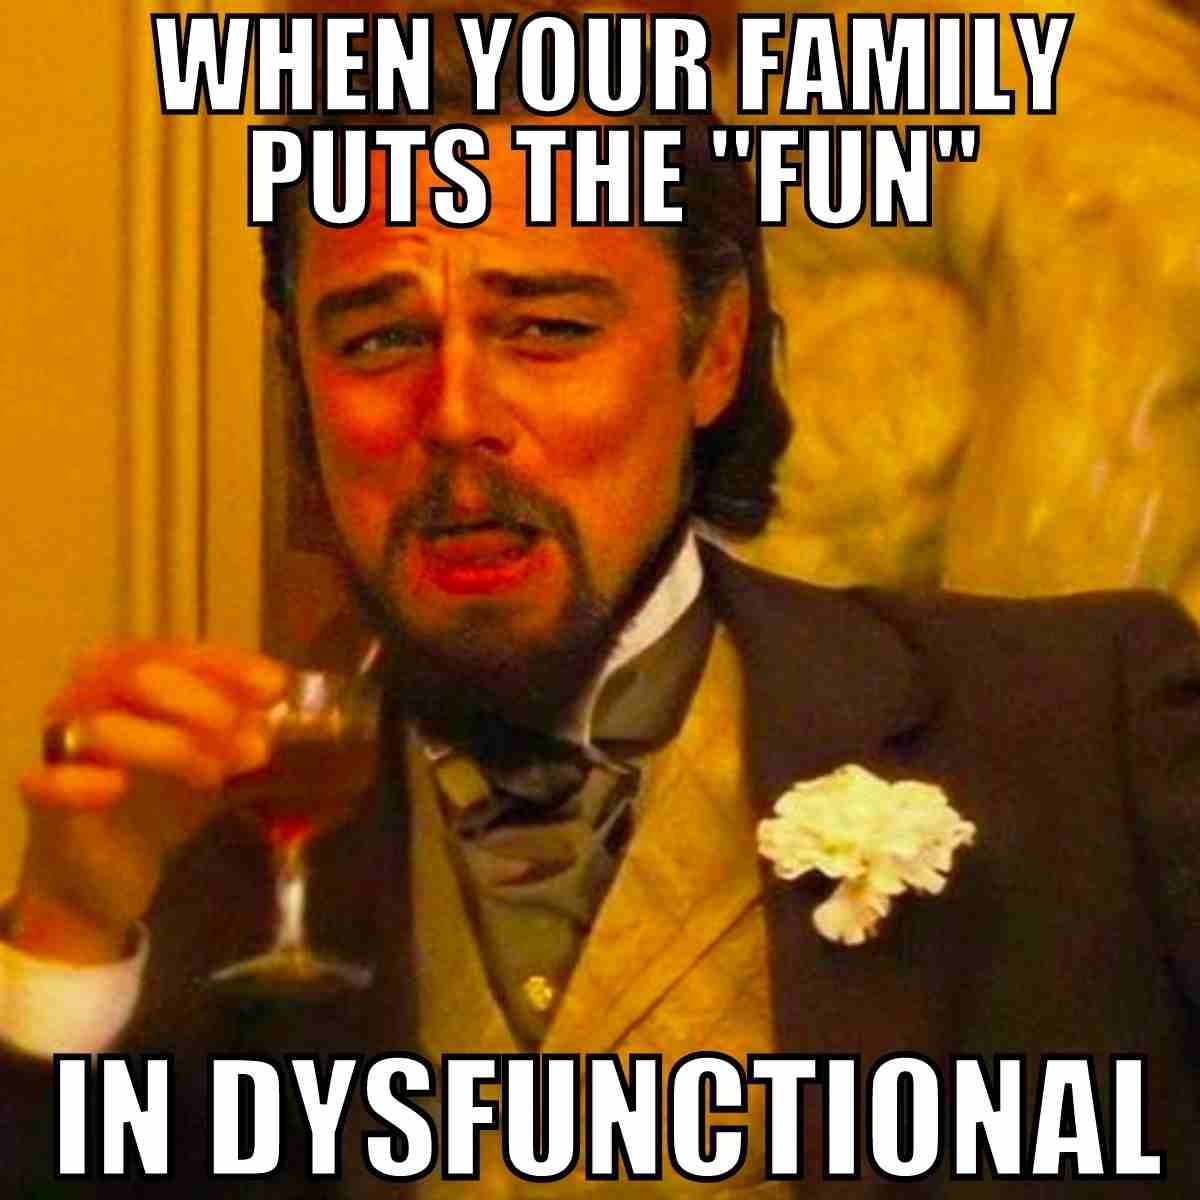 The Abernathy family def puts the fun in dysfunctional. #familydrama #dysfunctionalfamily #podcast #podcasting #audiodrama #fictionpodcasts #soapopera